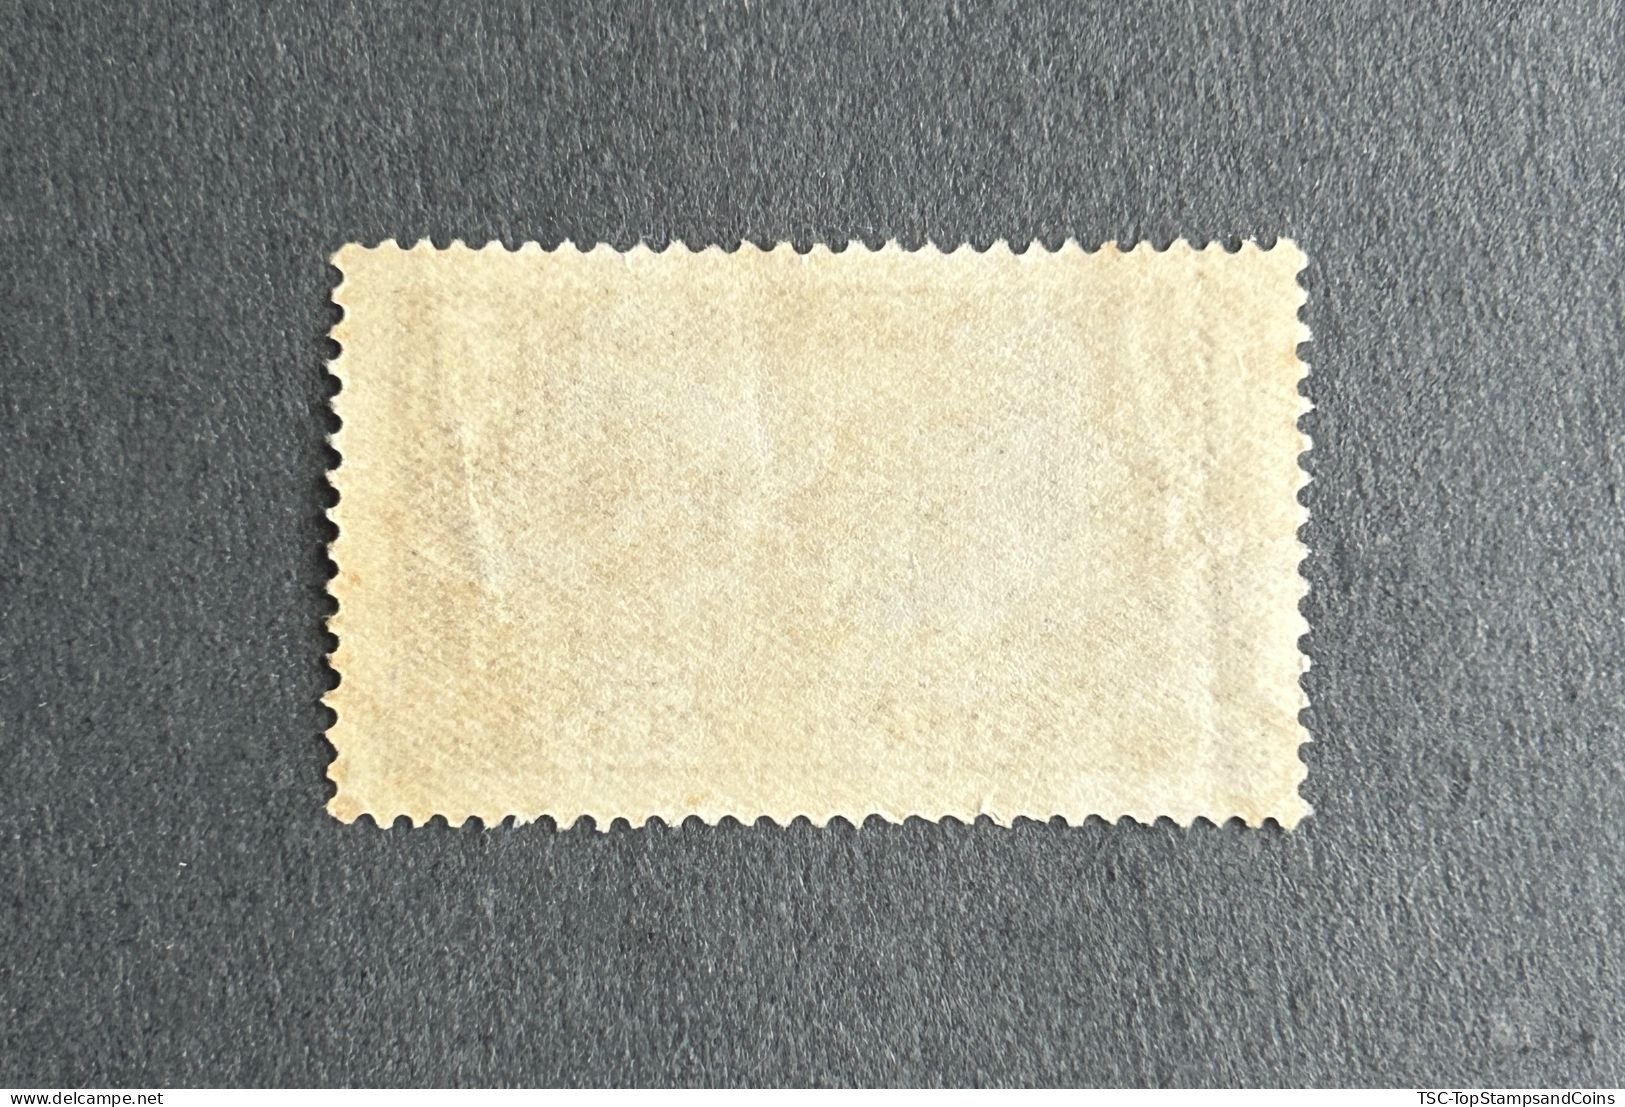 FRCG124U2 - Brazzaville - Pasteur Institute - 50 C Used Stamp - Middle Congo - 1933 - Gebruikt